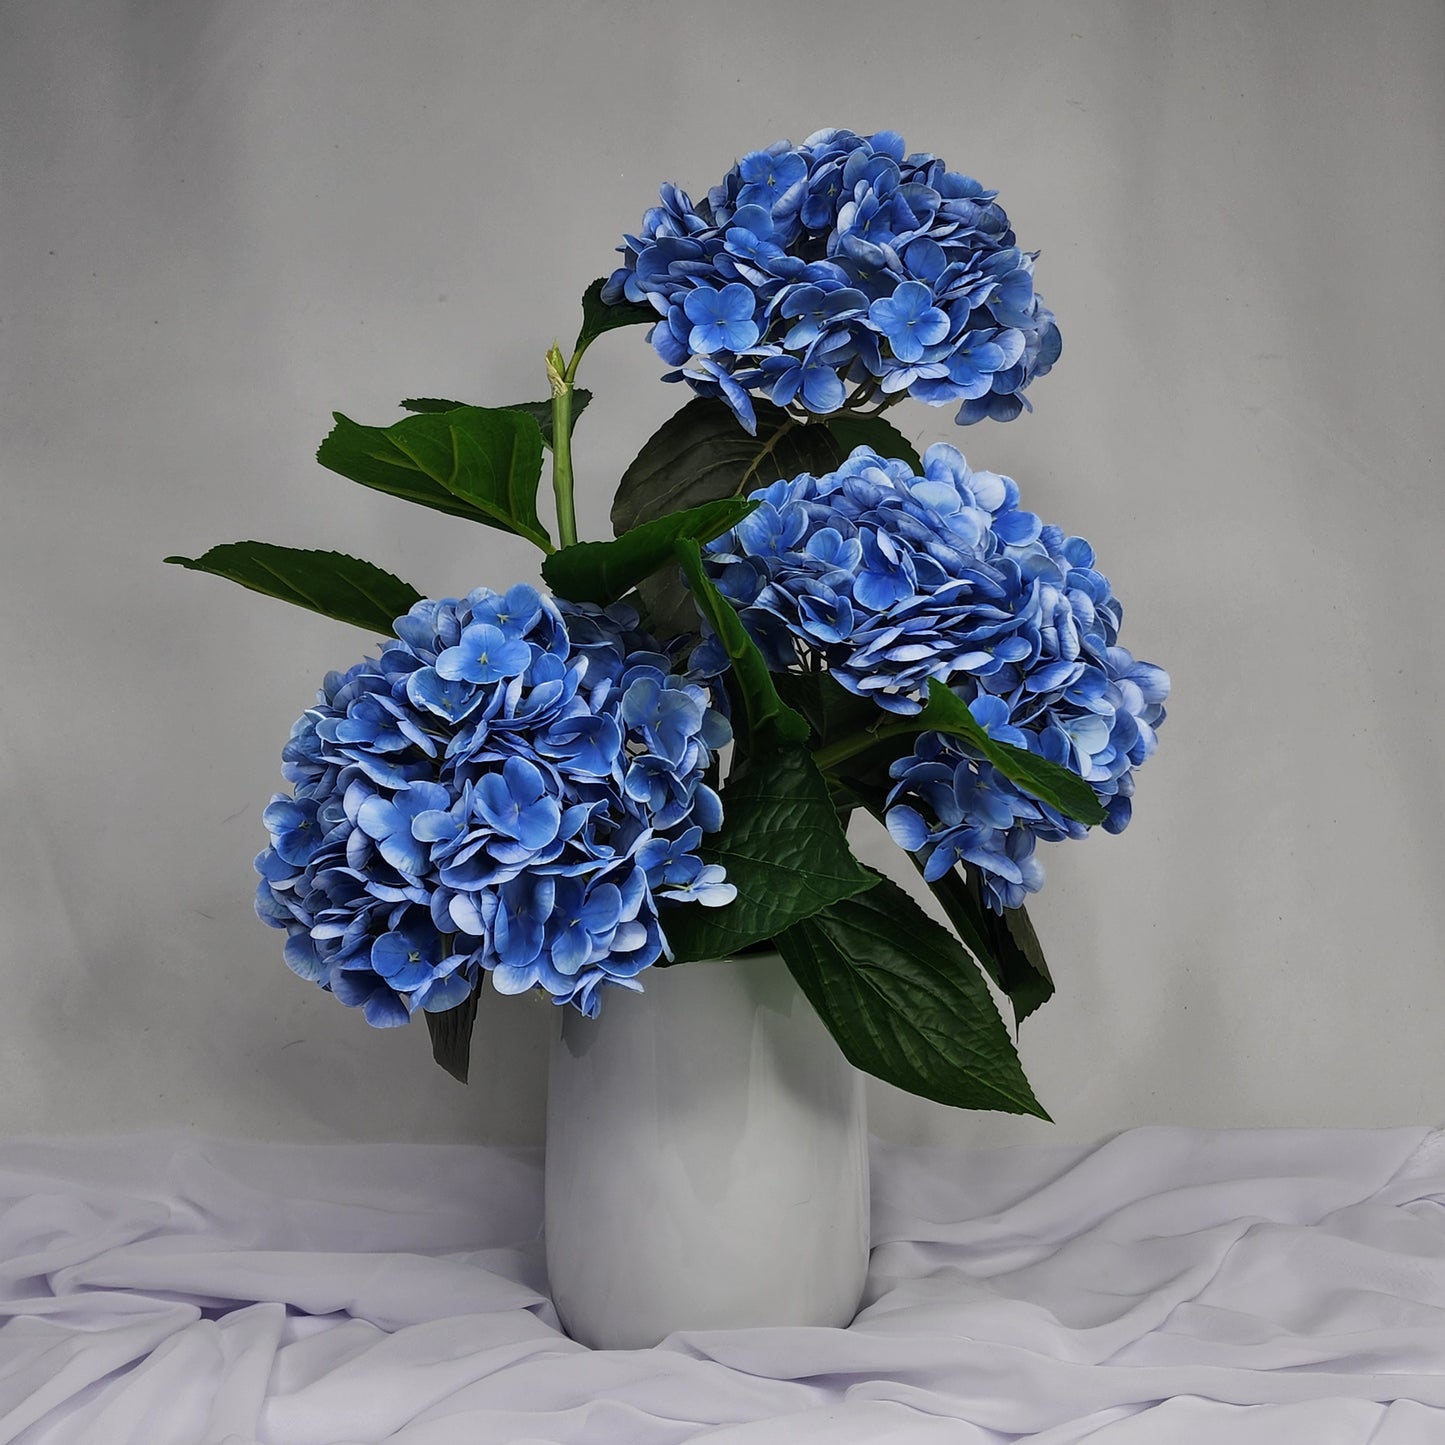 Dark Blue Hydrangeas in Ceramic Vase - Realistic Artificial Flowers